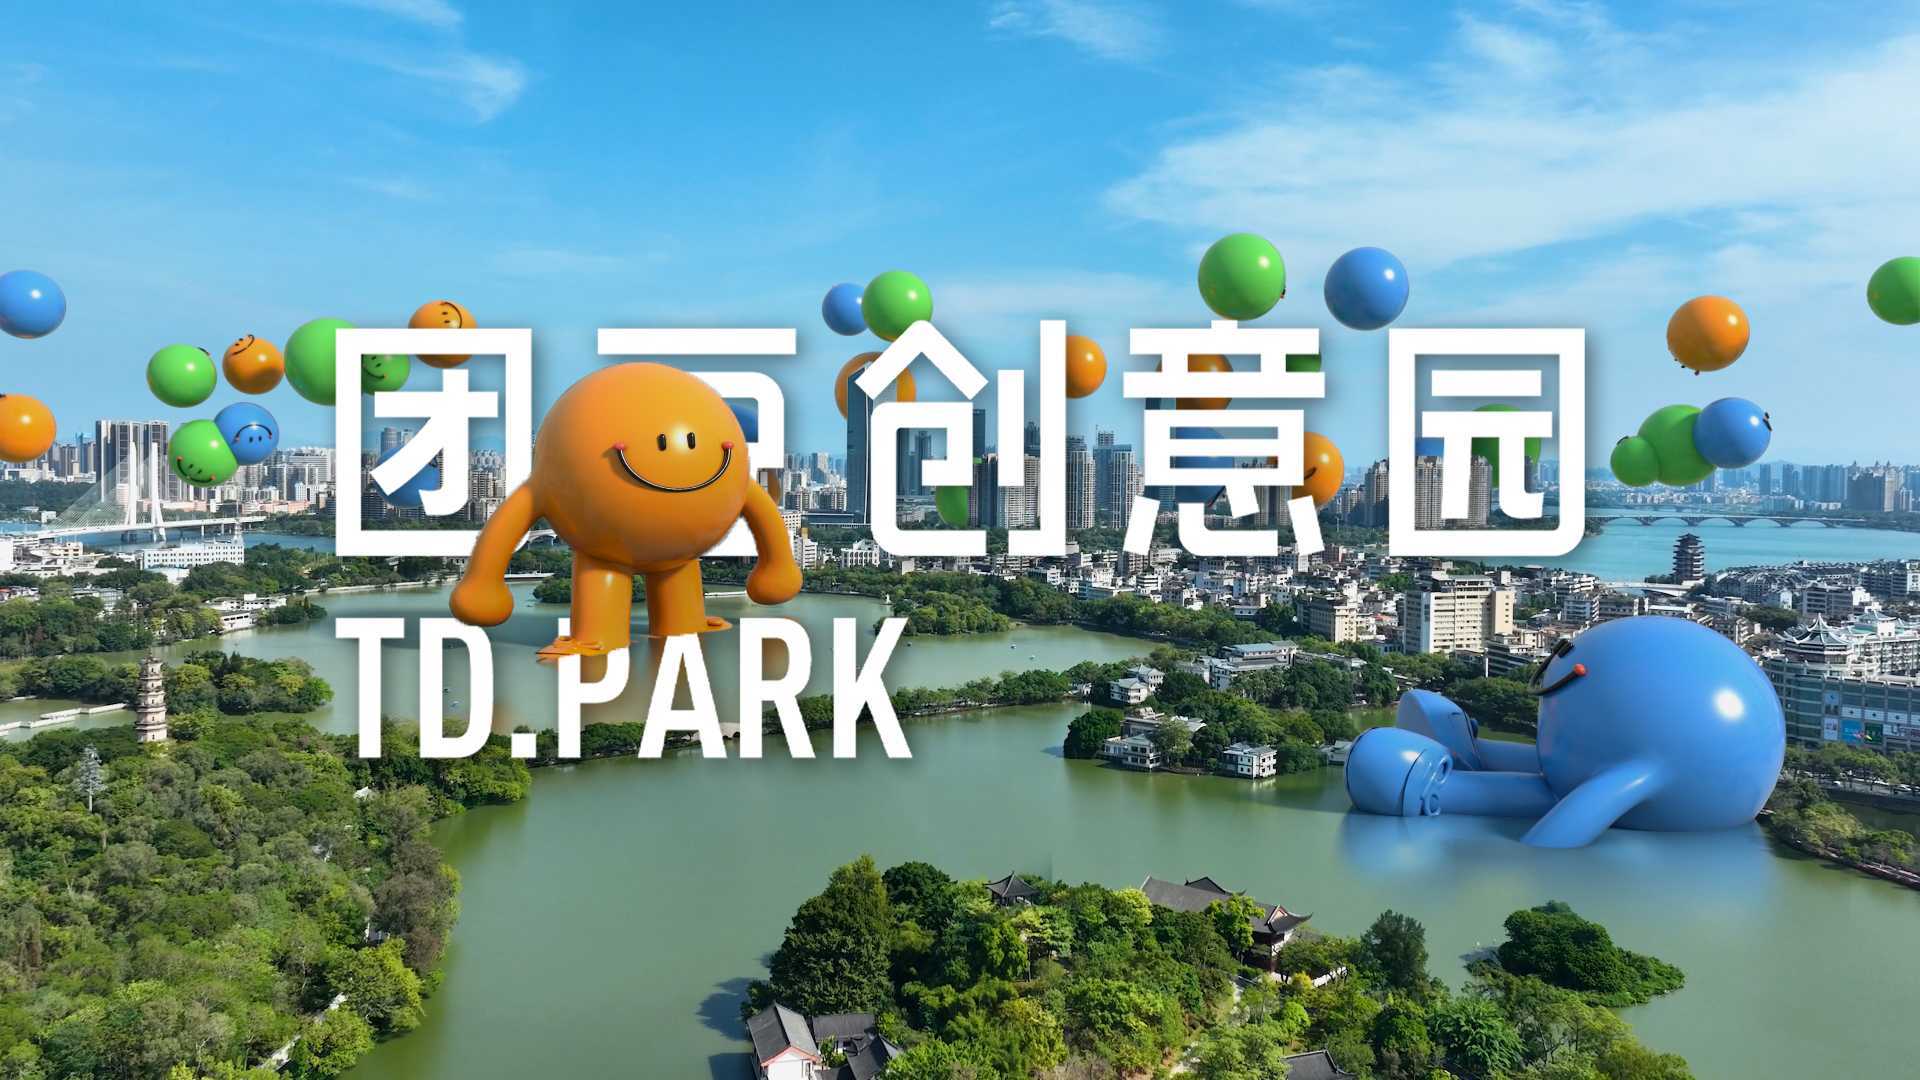 TD.PARK 丨 团豆创意园招商影片